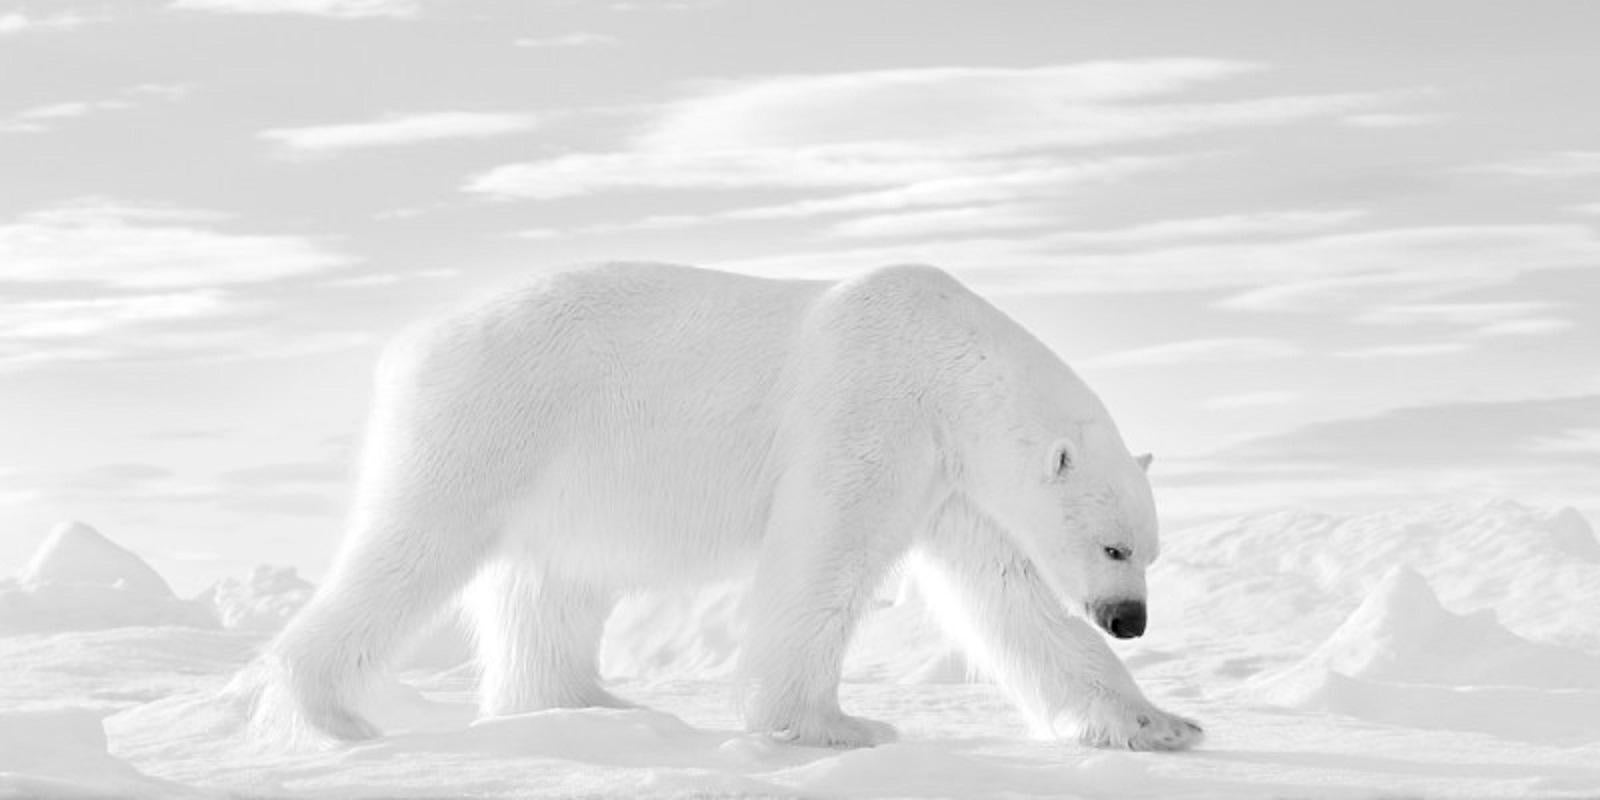 Prince of the Arctic (23.6" x 47.3") - Photograph by Kyriakos Kaziras